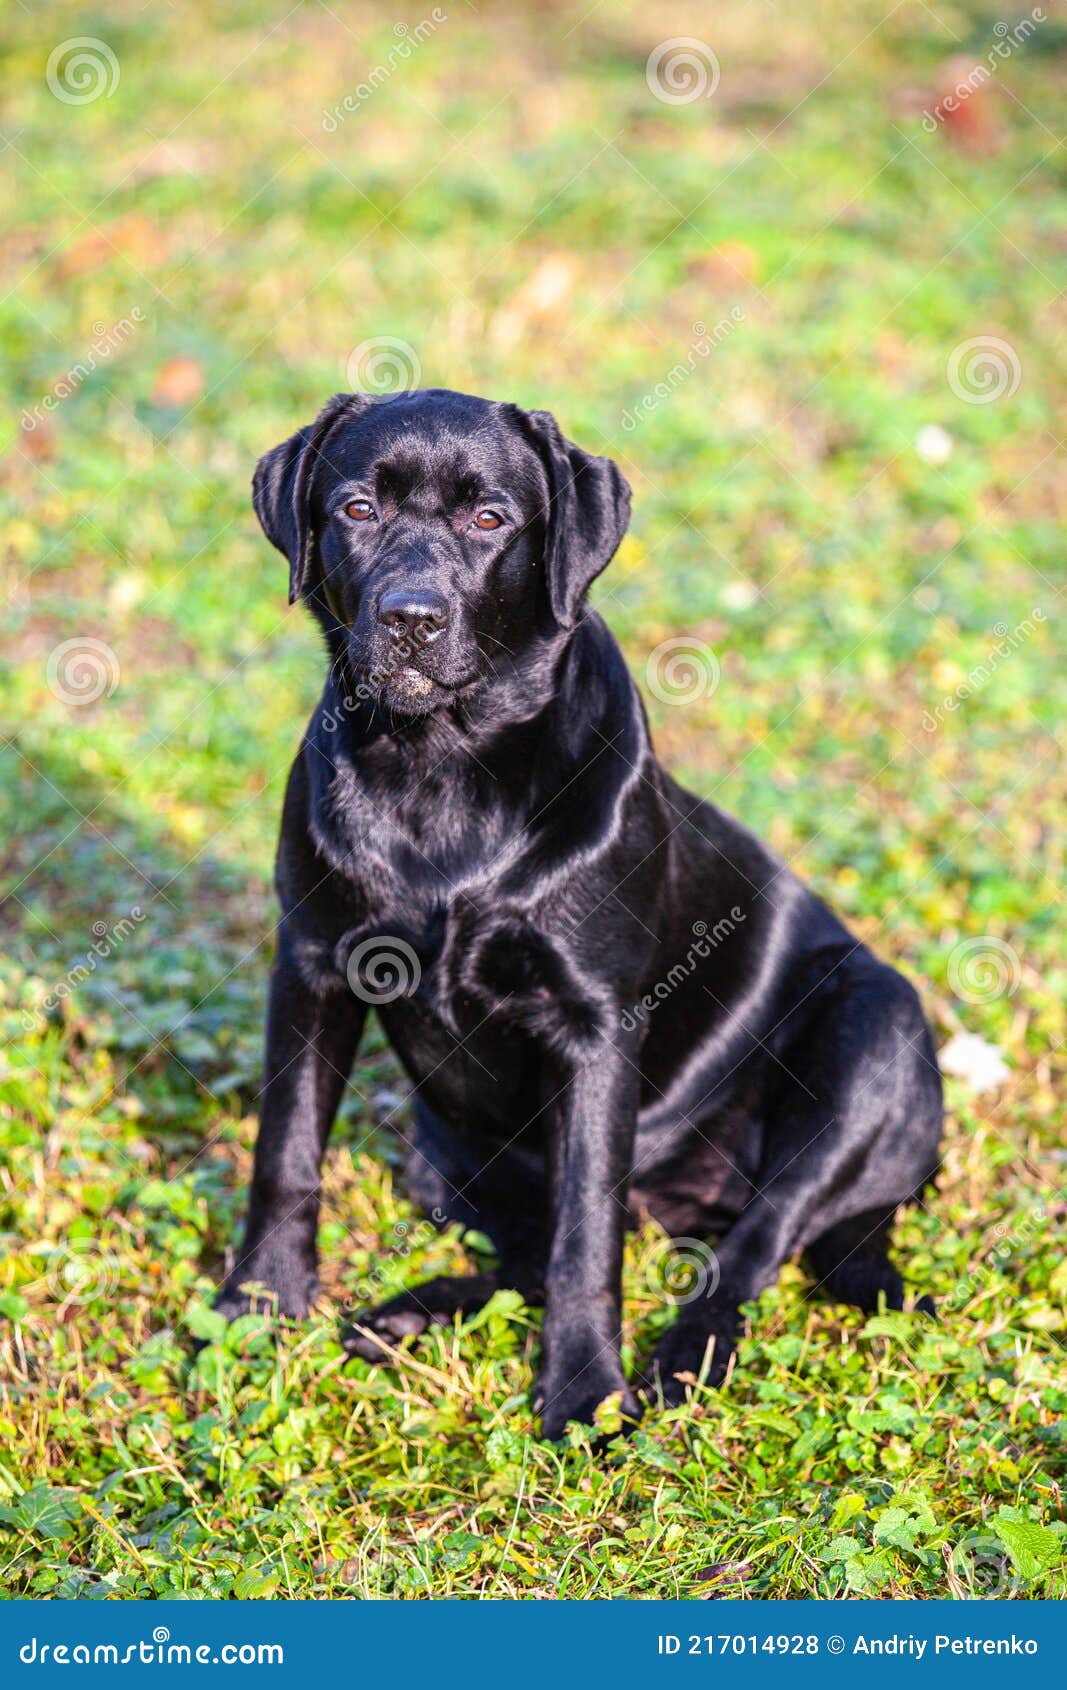 Big Black Dog Labrador Retriever in Nature Stock Photo - Image of ...